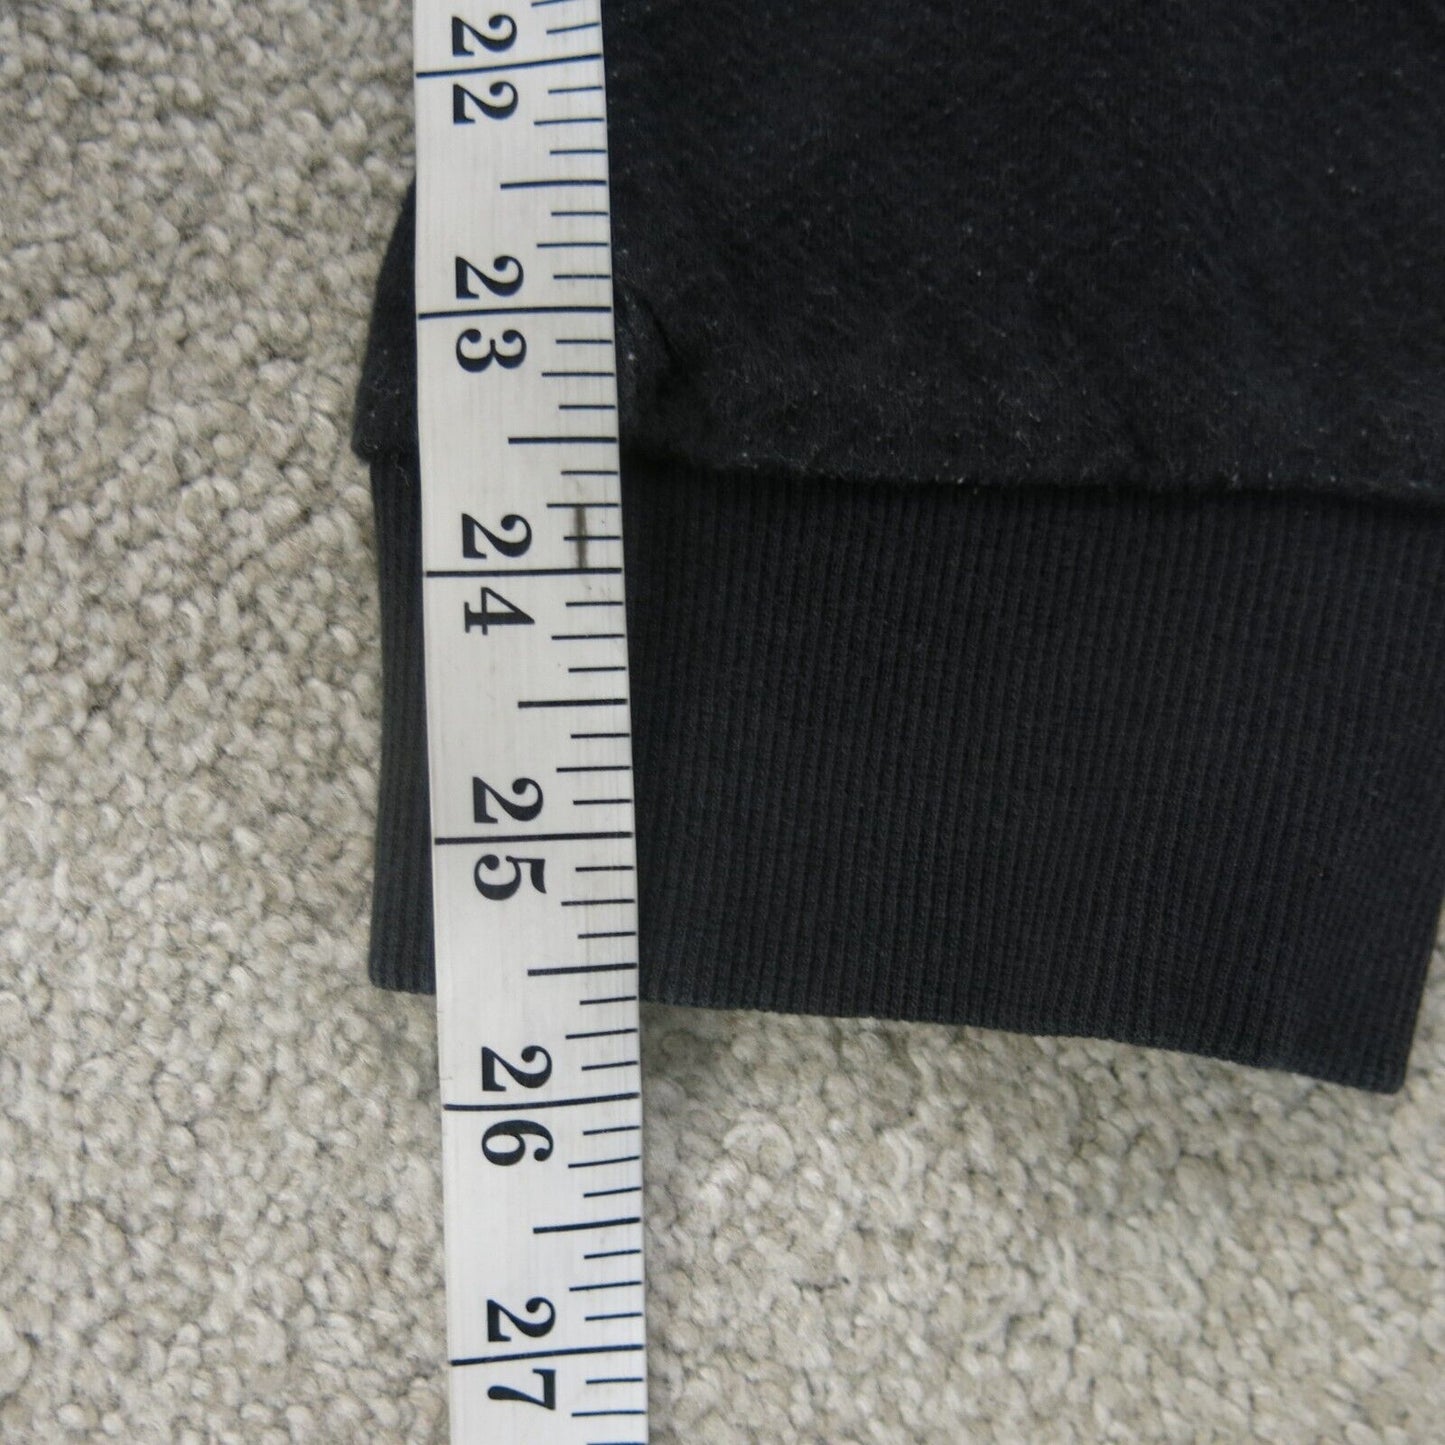 Adidas Pants Mens Small Black Activewear Jogger Pants Elastic Waist 3 Stripes